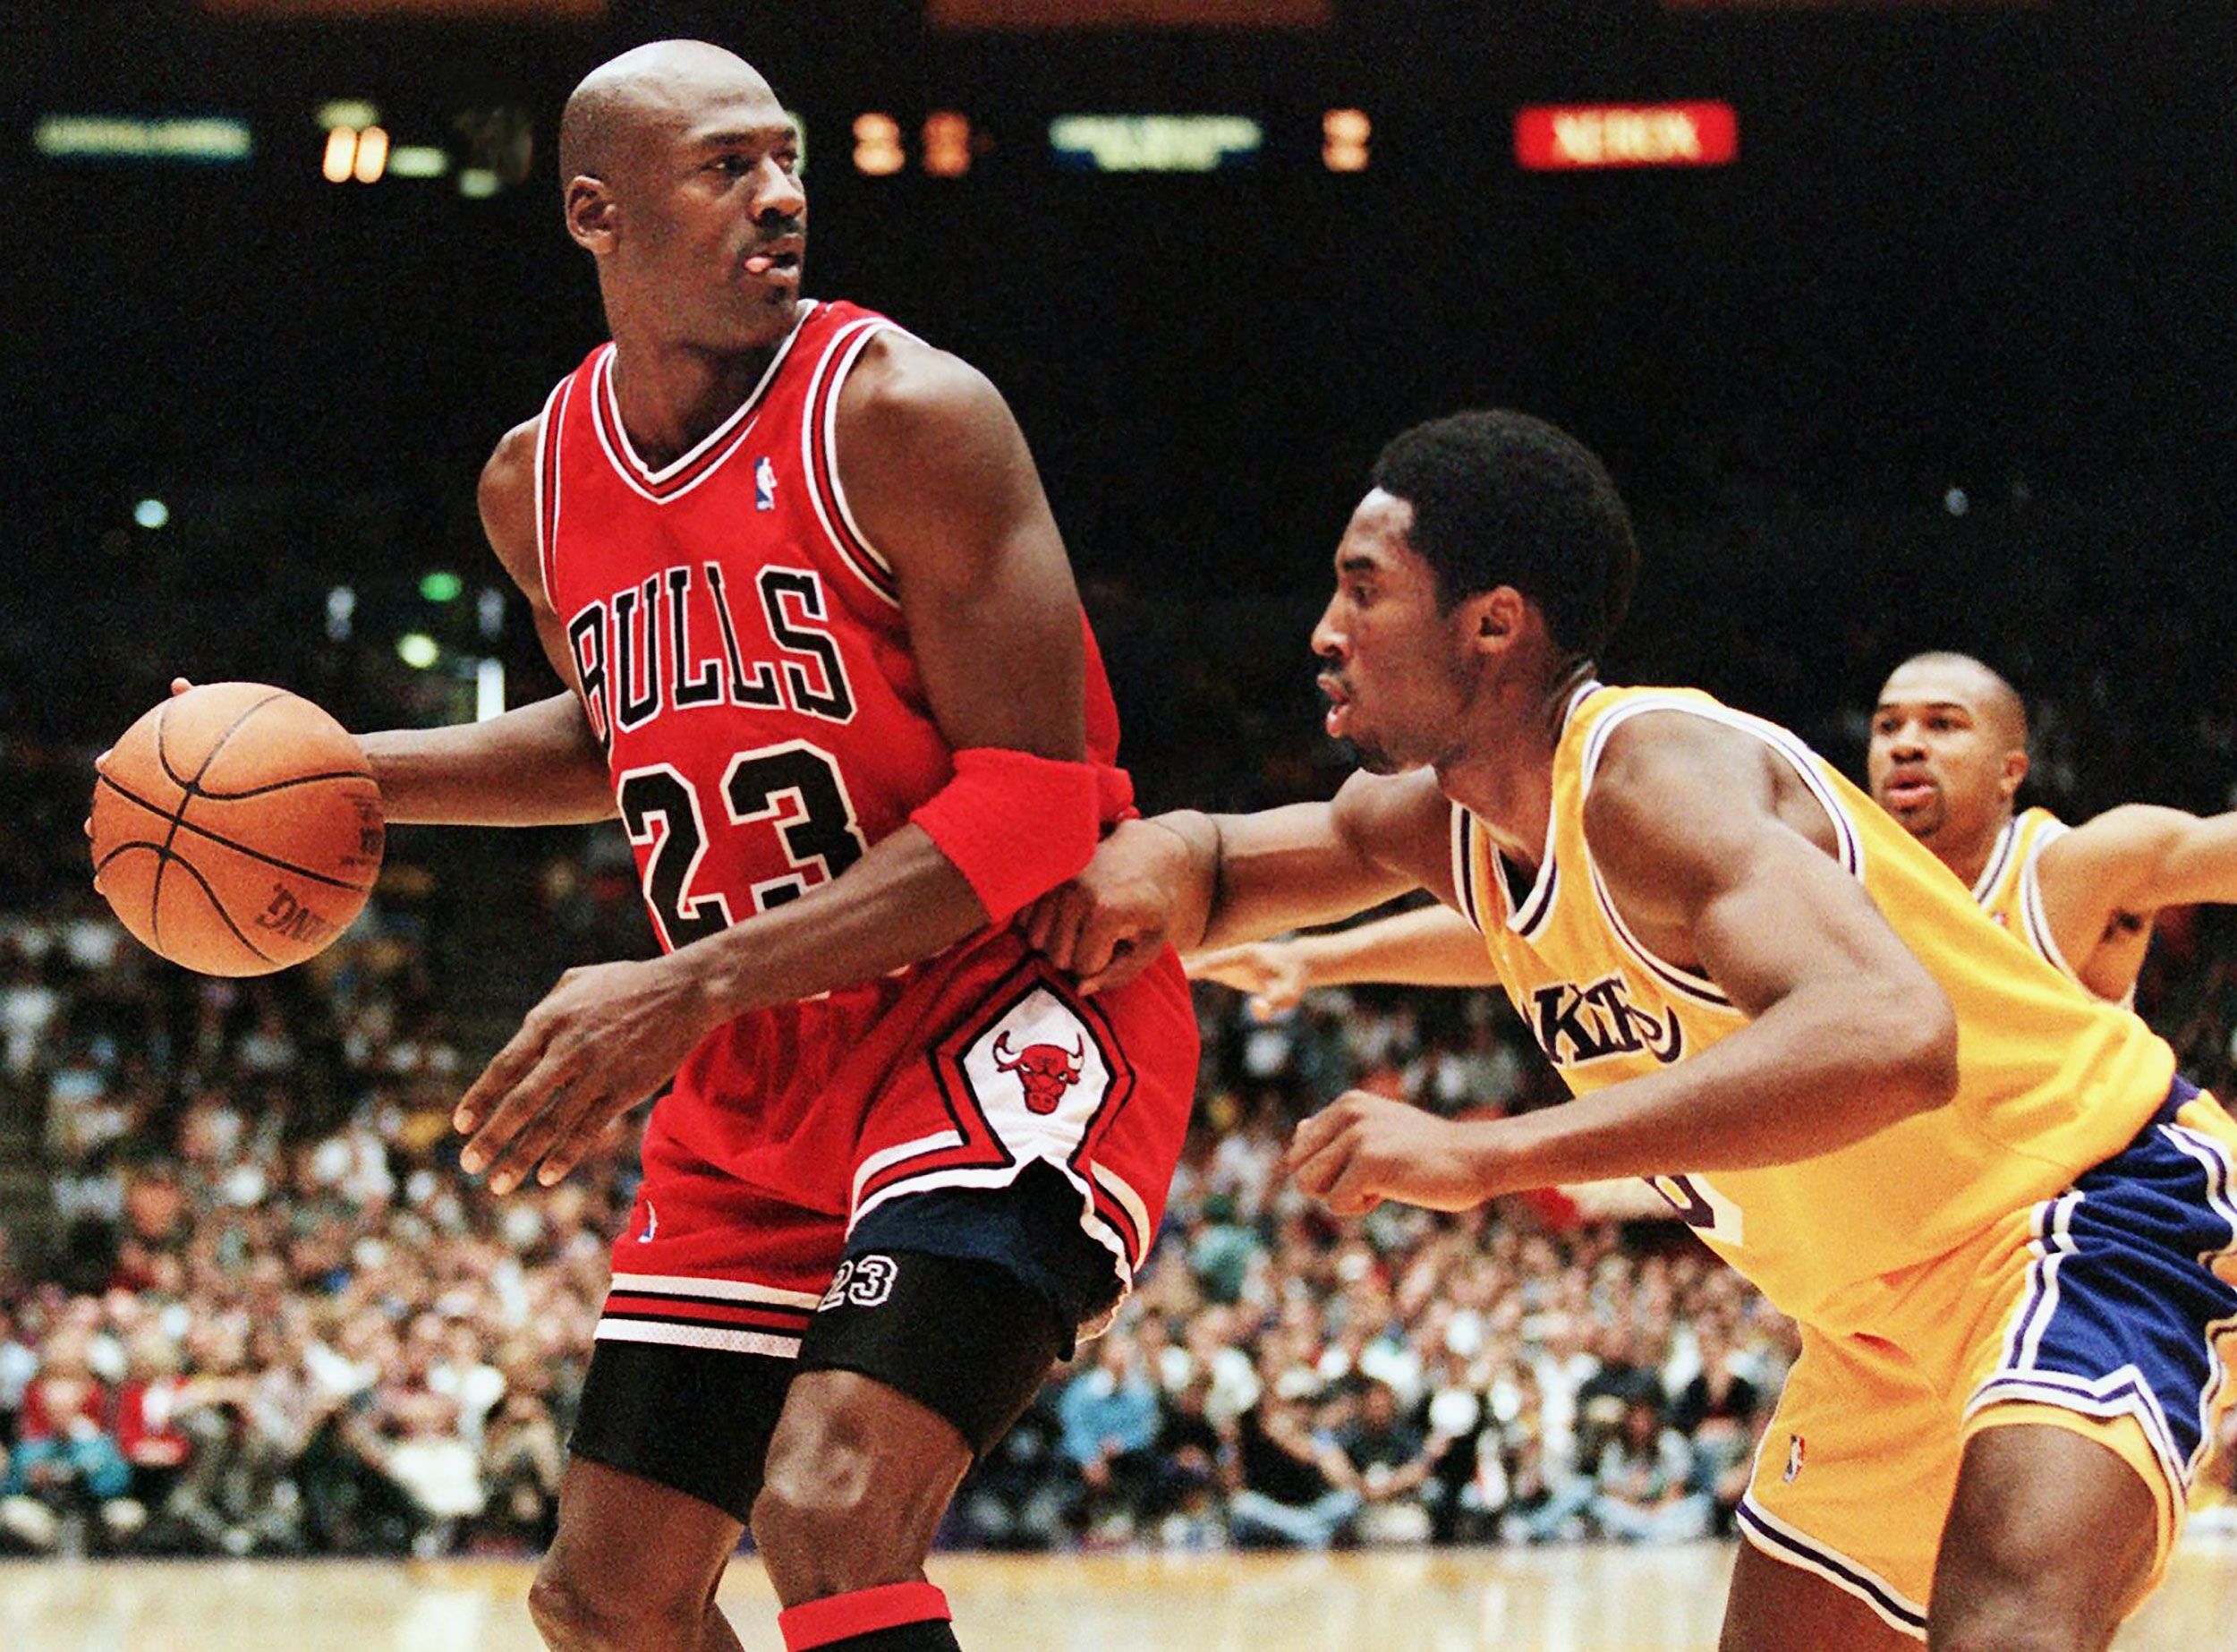 The Last Dance' brings Michael Jordan's era to life for fans | CNN